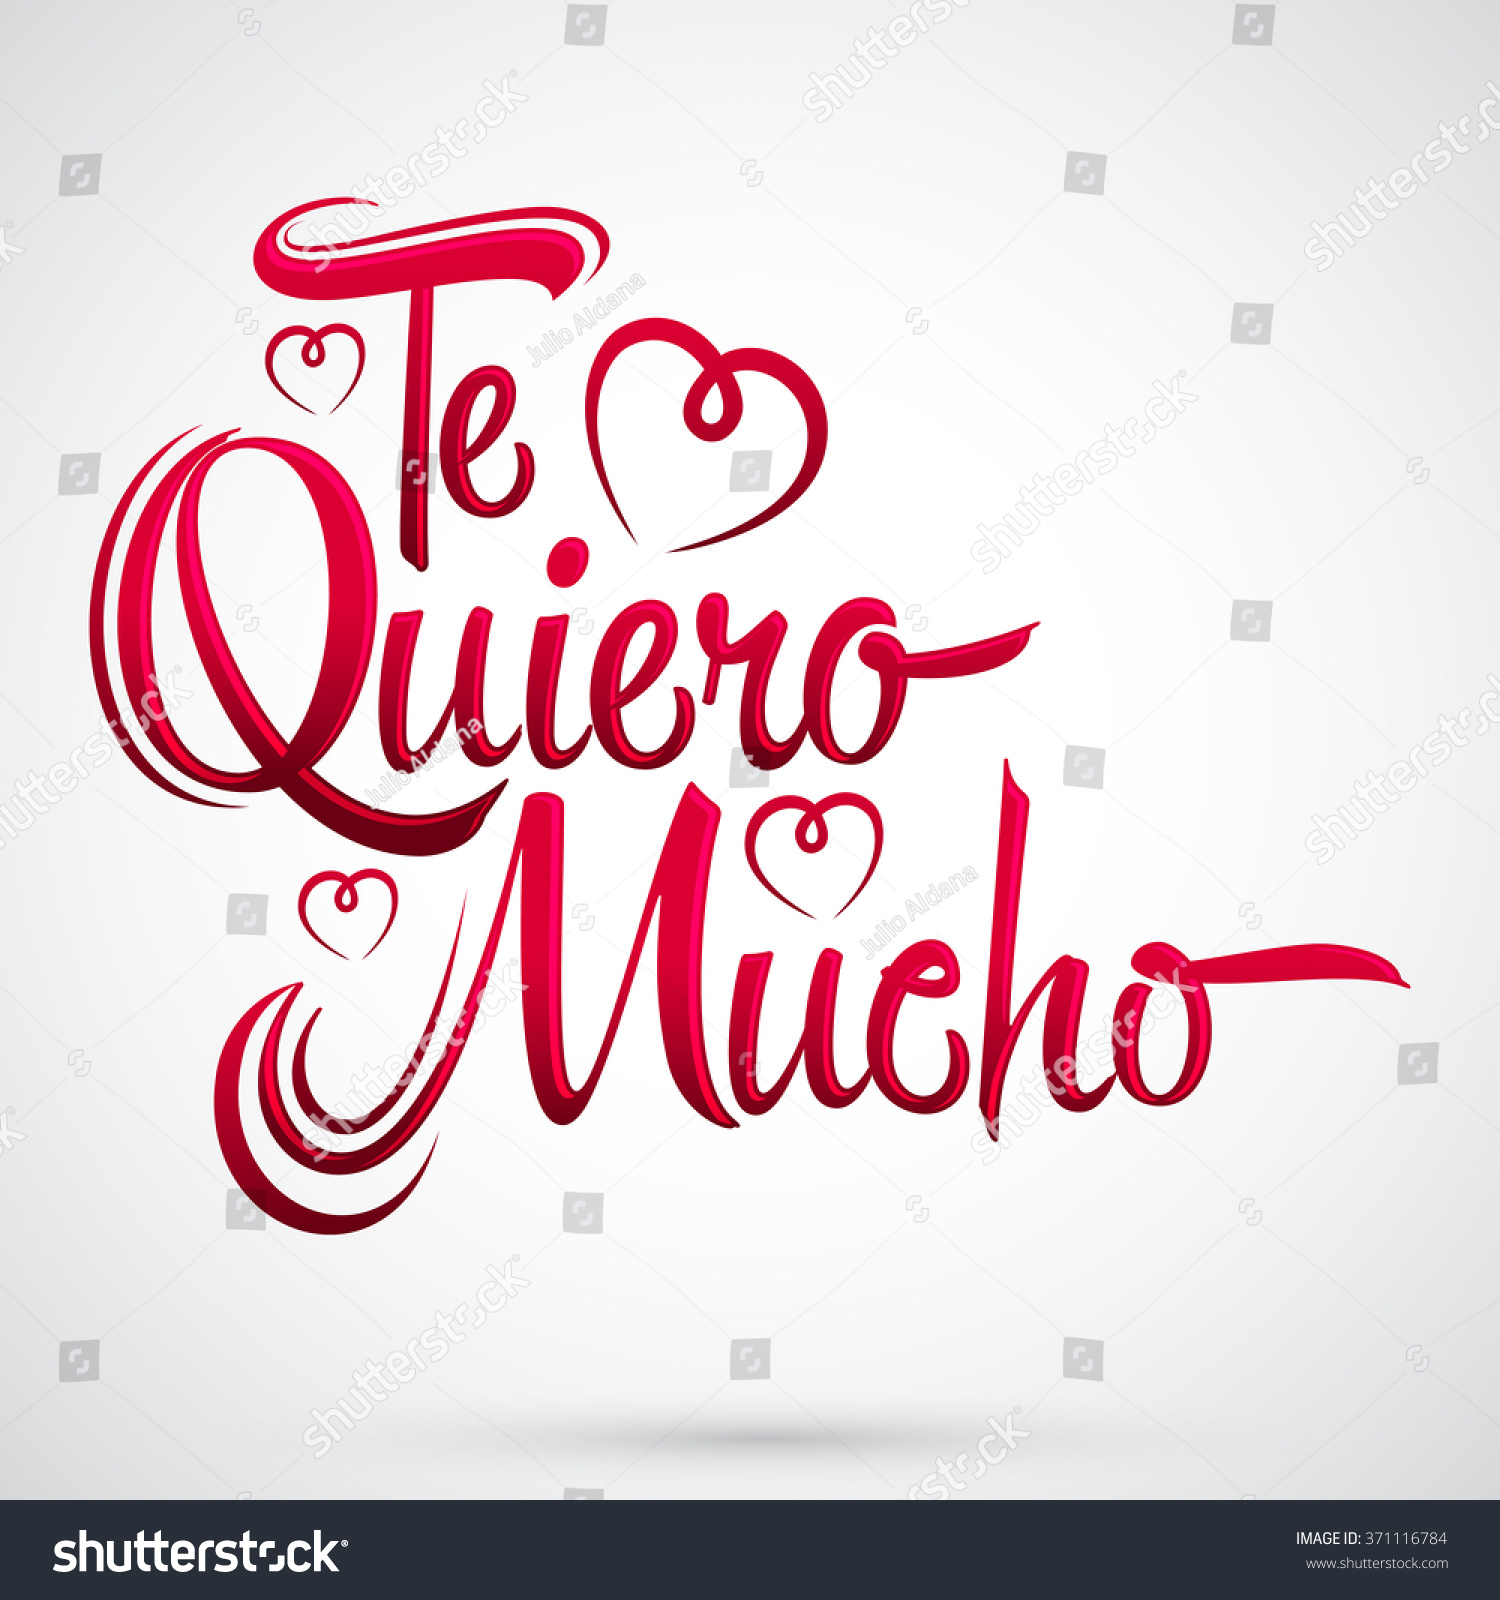 Te Quiero Mucho Love You Much Stock Vector 371116784 - Shutterstock